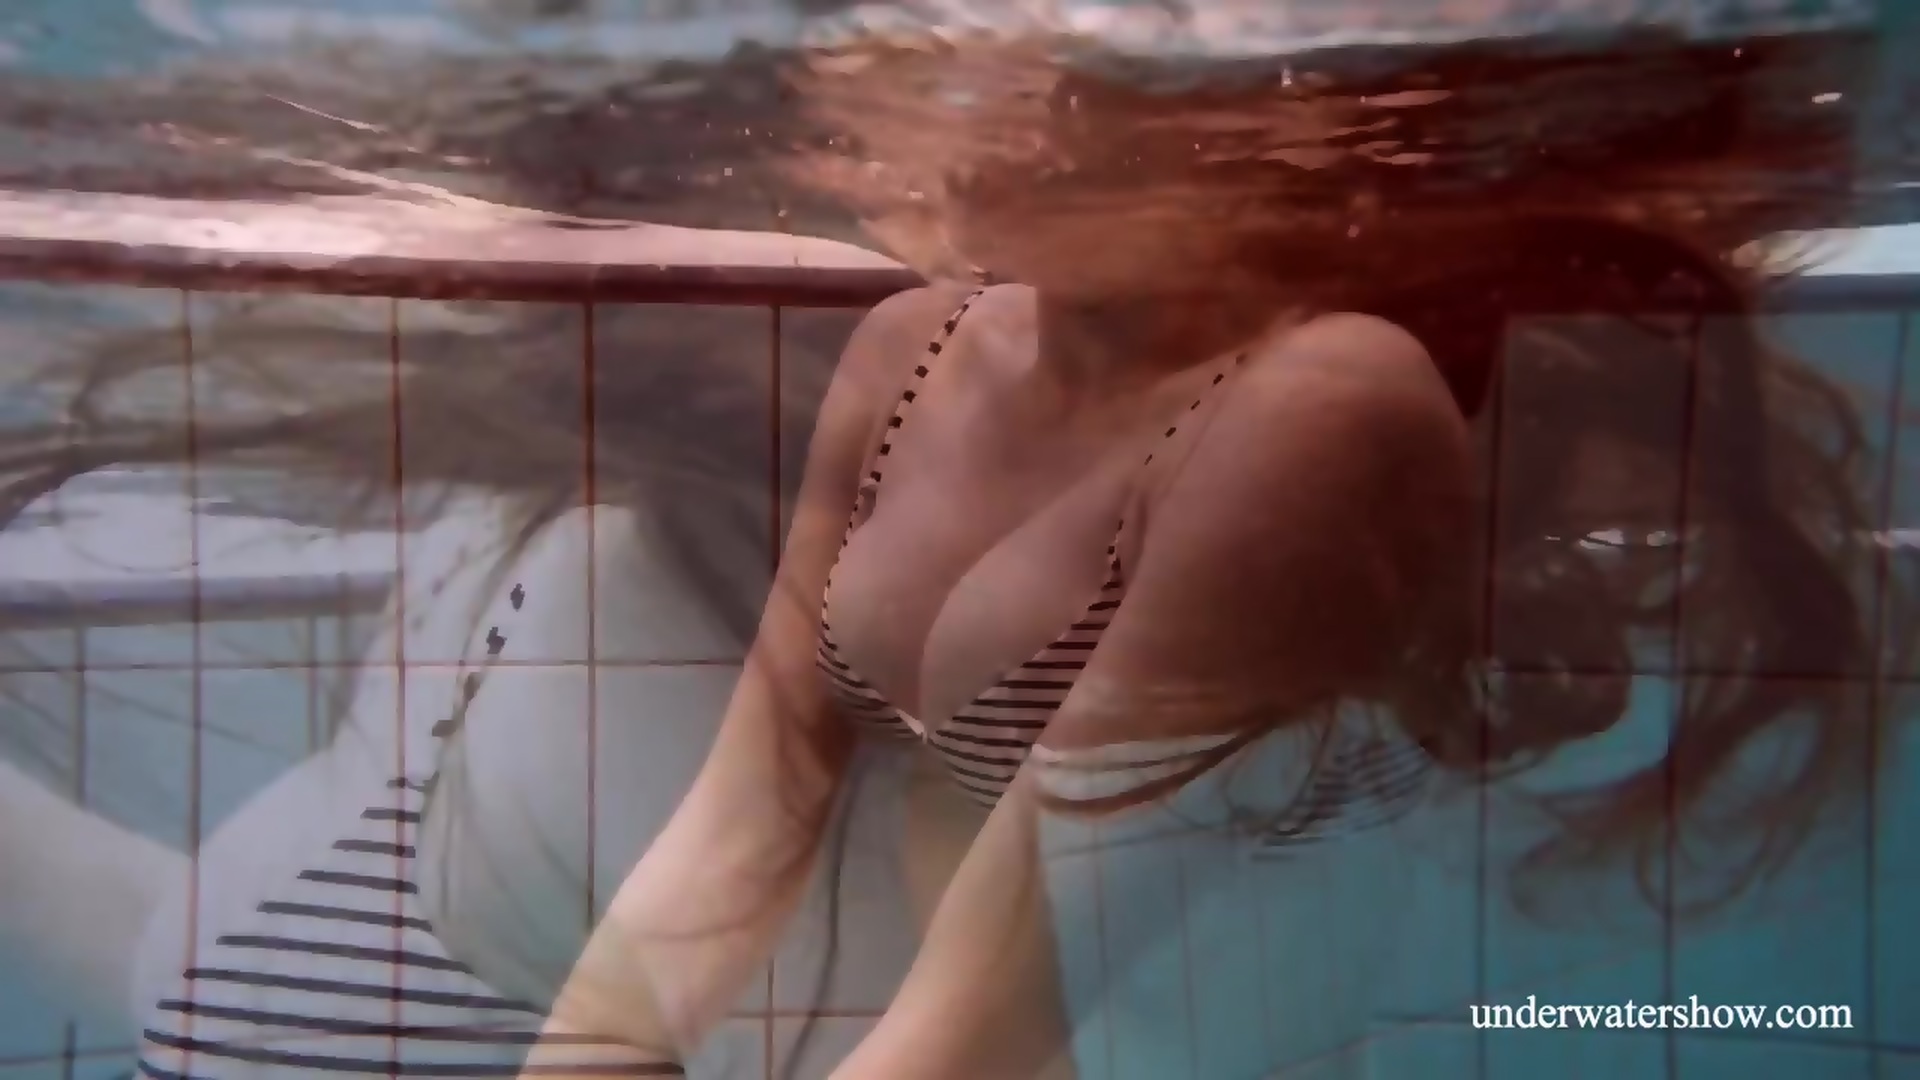 Sex Under Water With Big Tits - Brunette With Big Tits Underwater - EPORNER